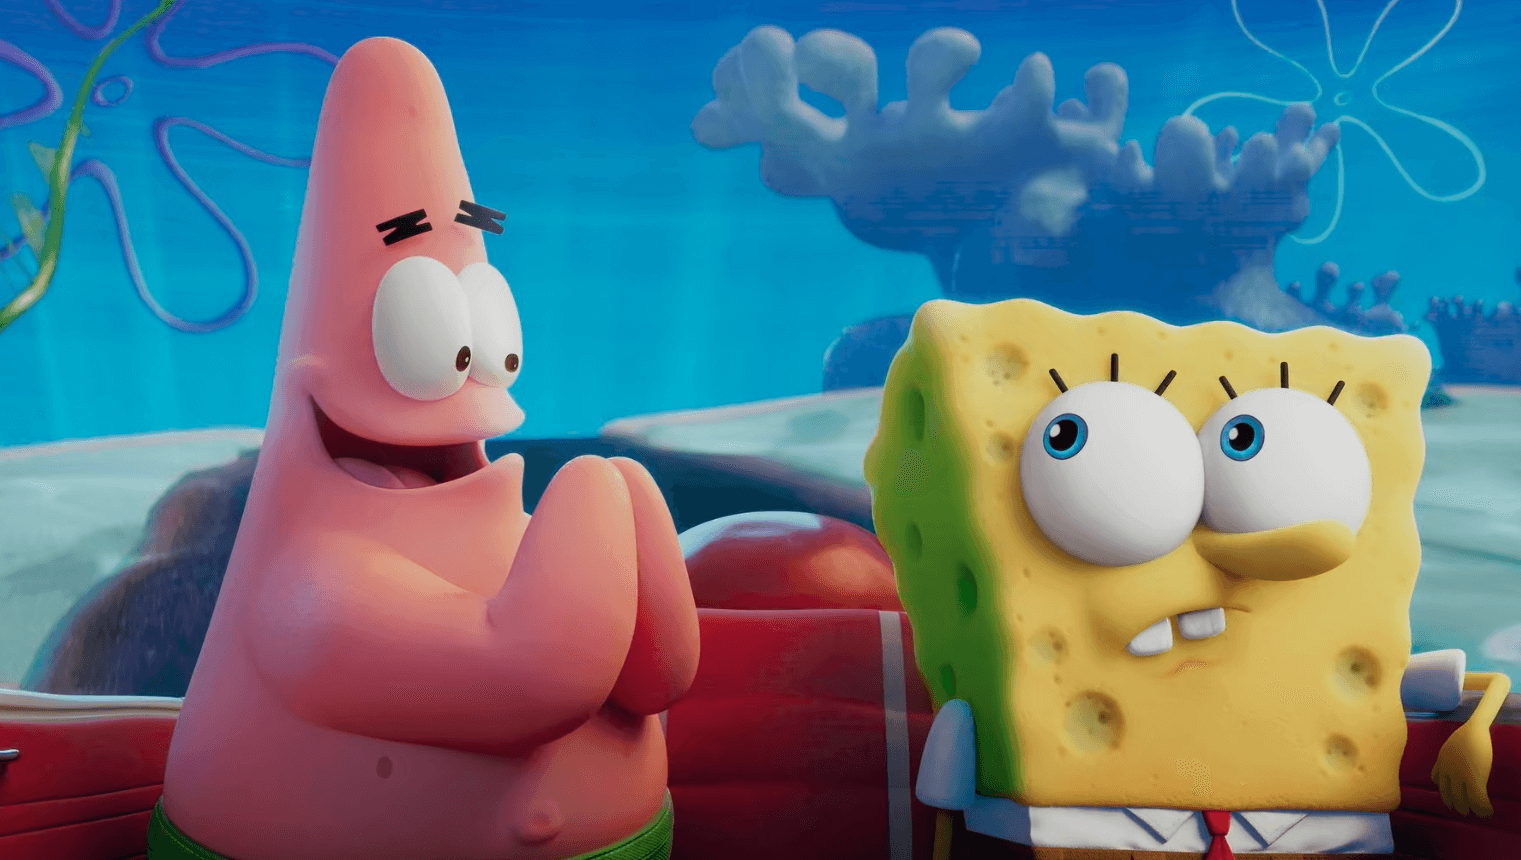 the-spongebob-squarepants